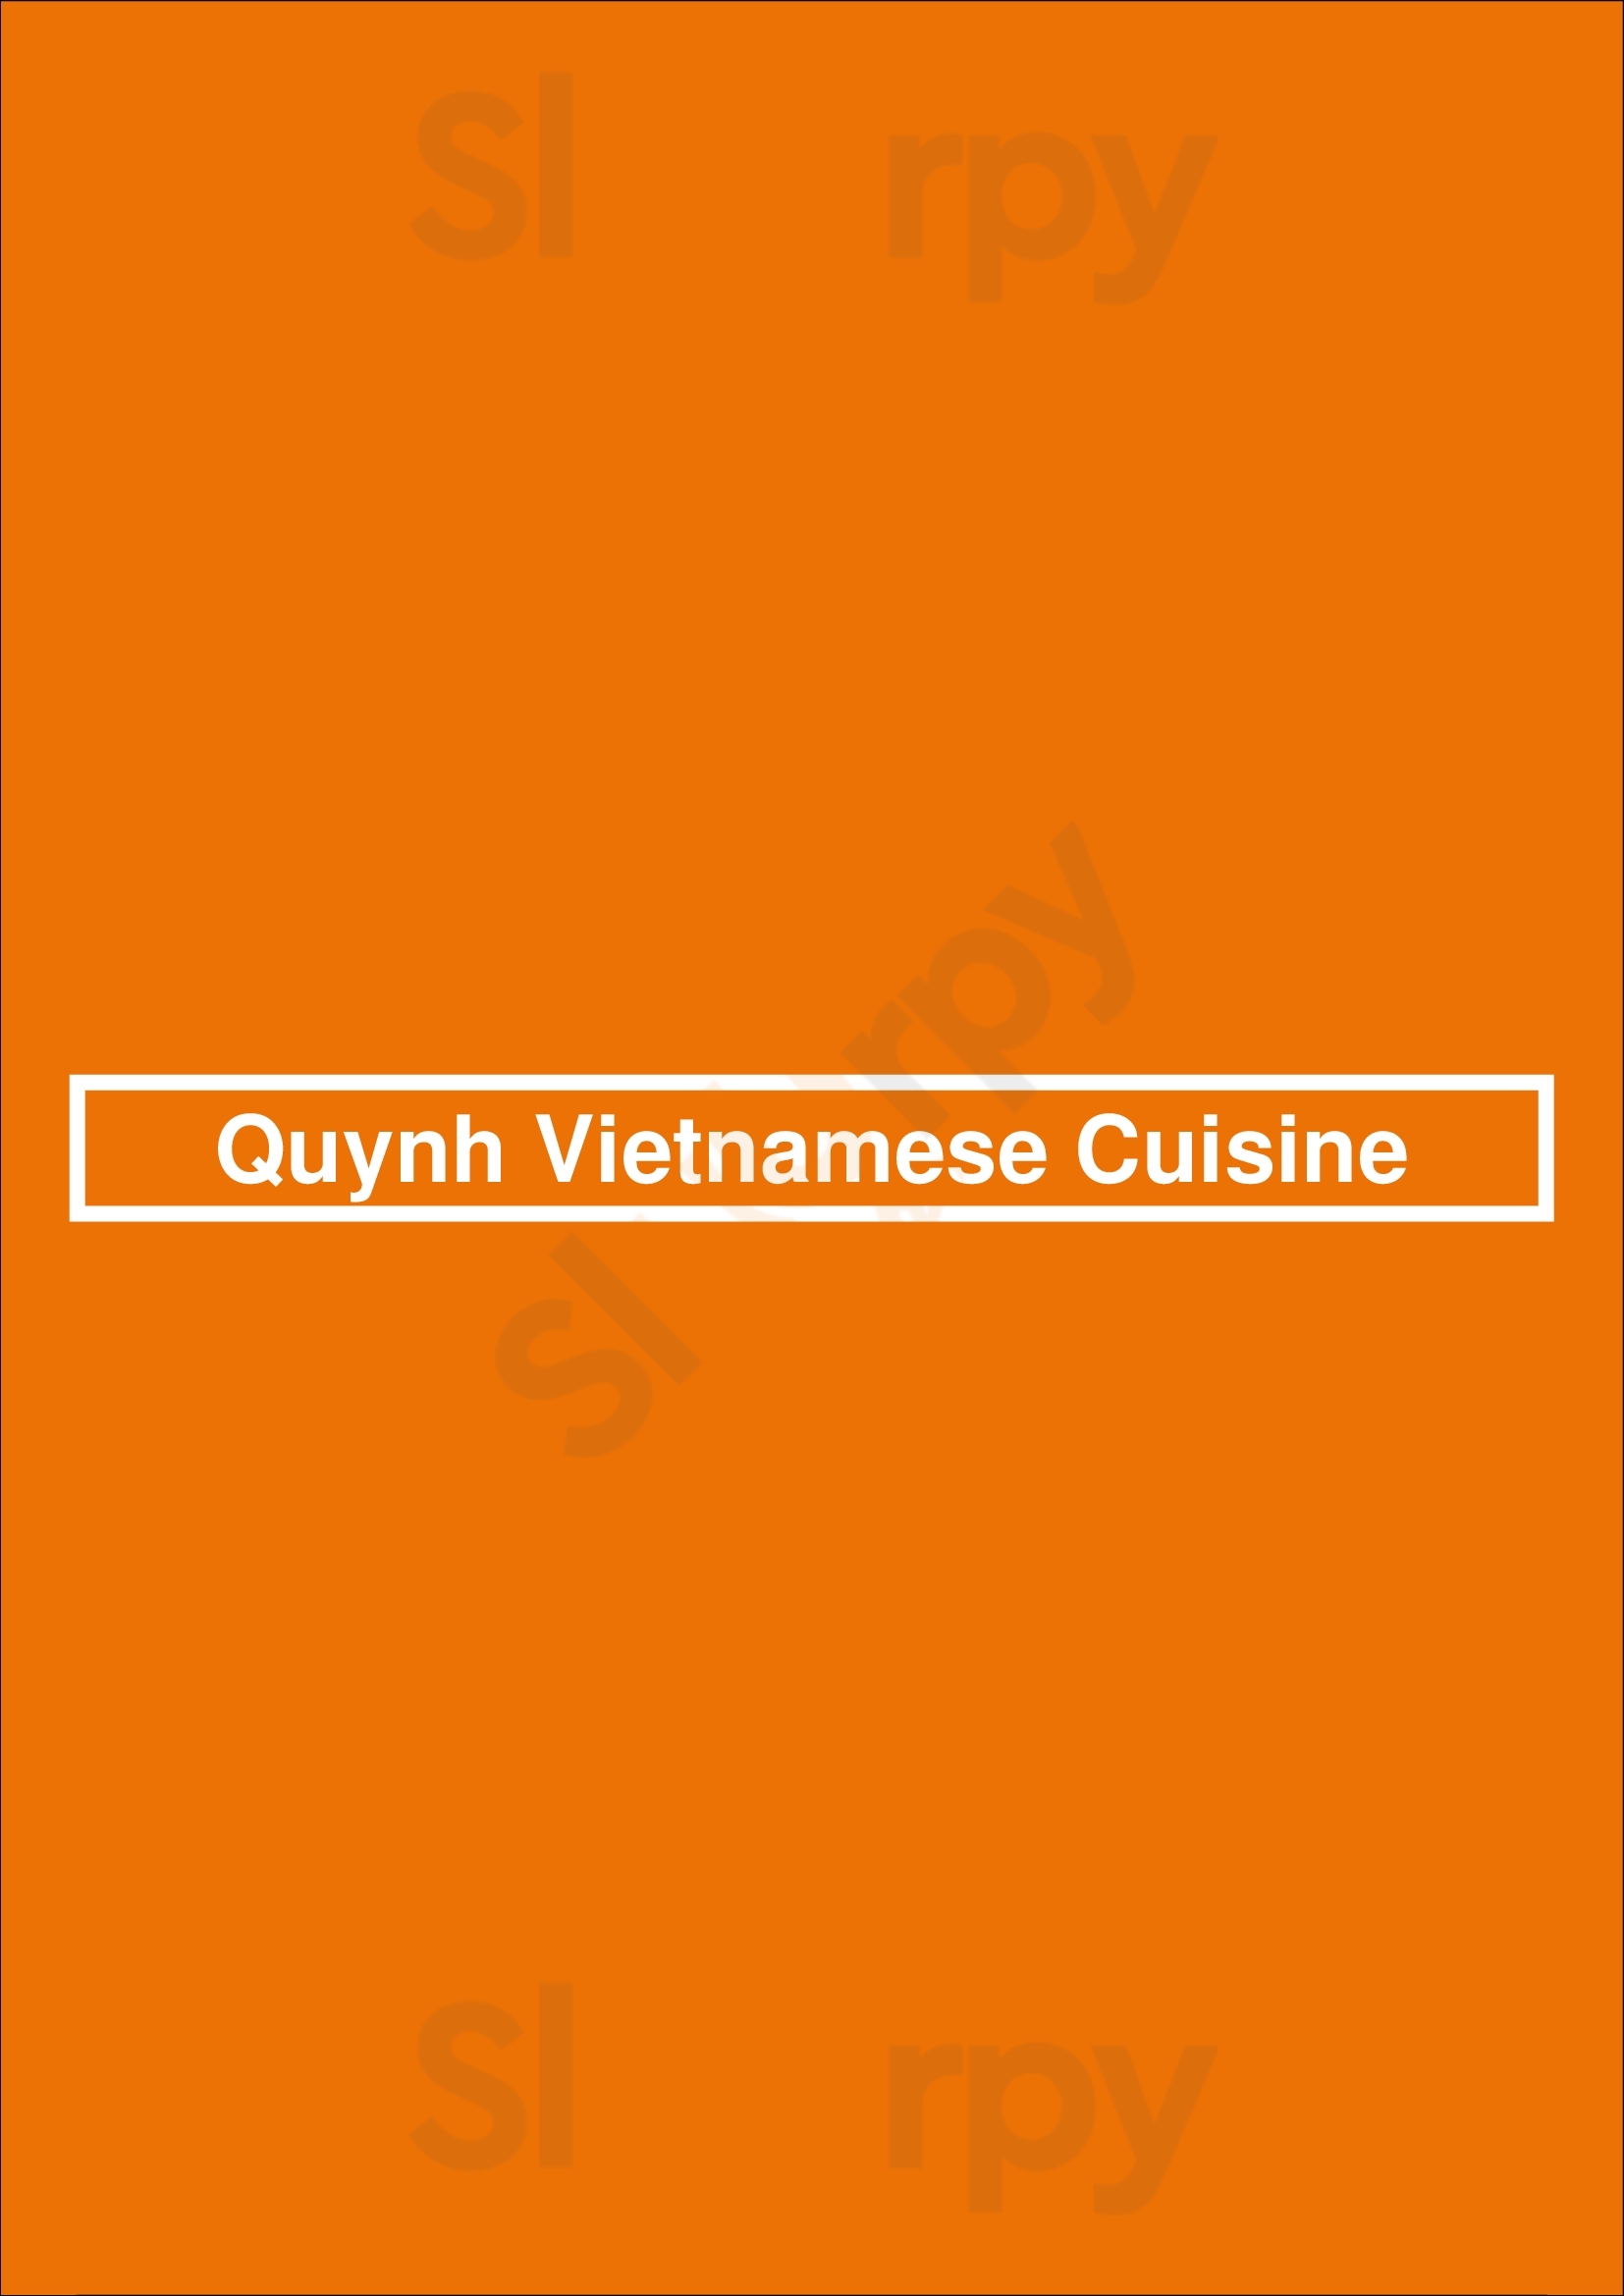 Quynh Vietnamese Cuisine Ltd Calgary Menu - 1